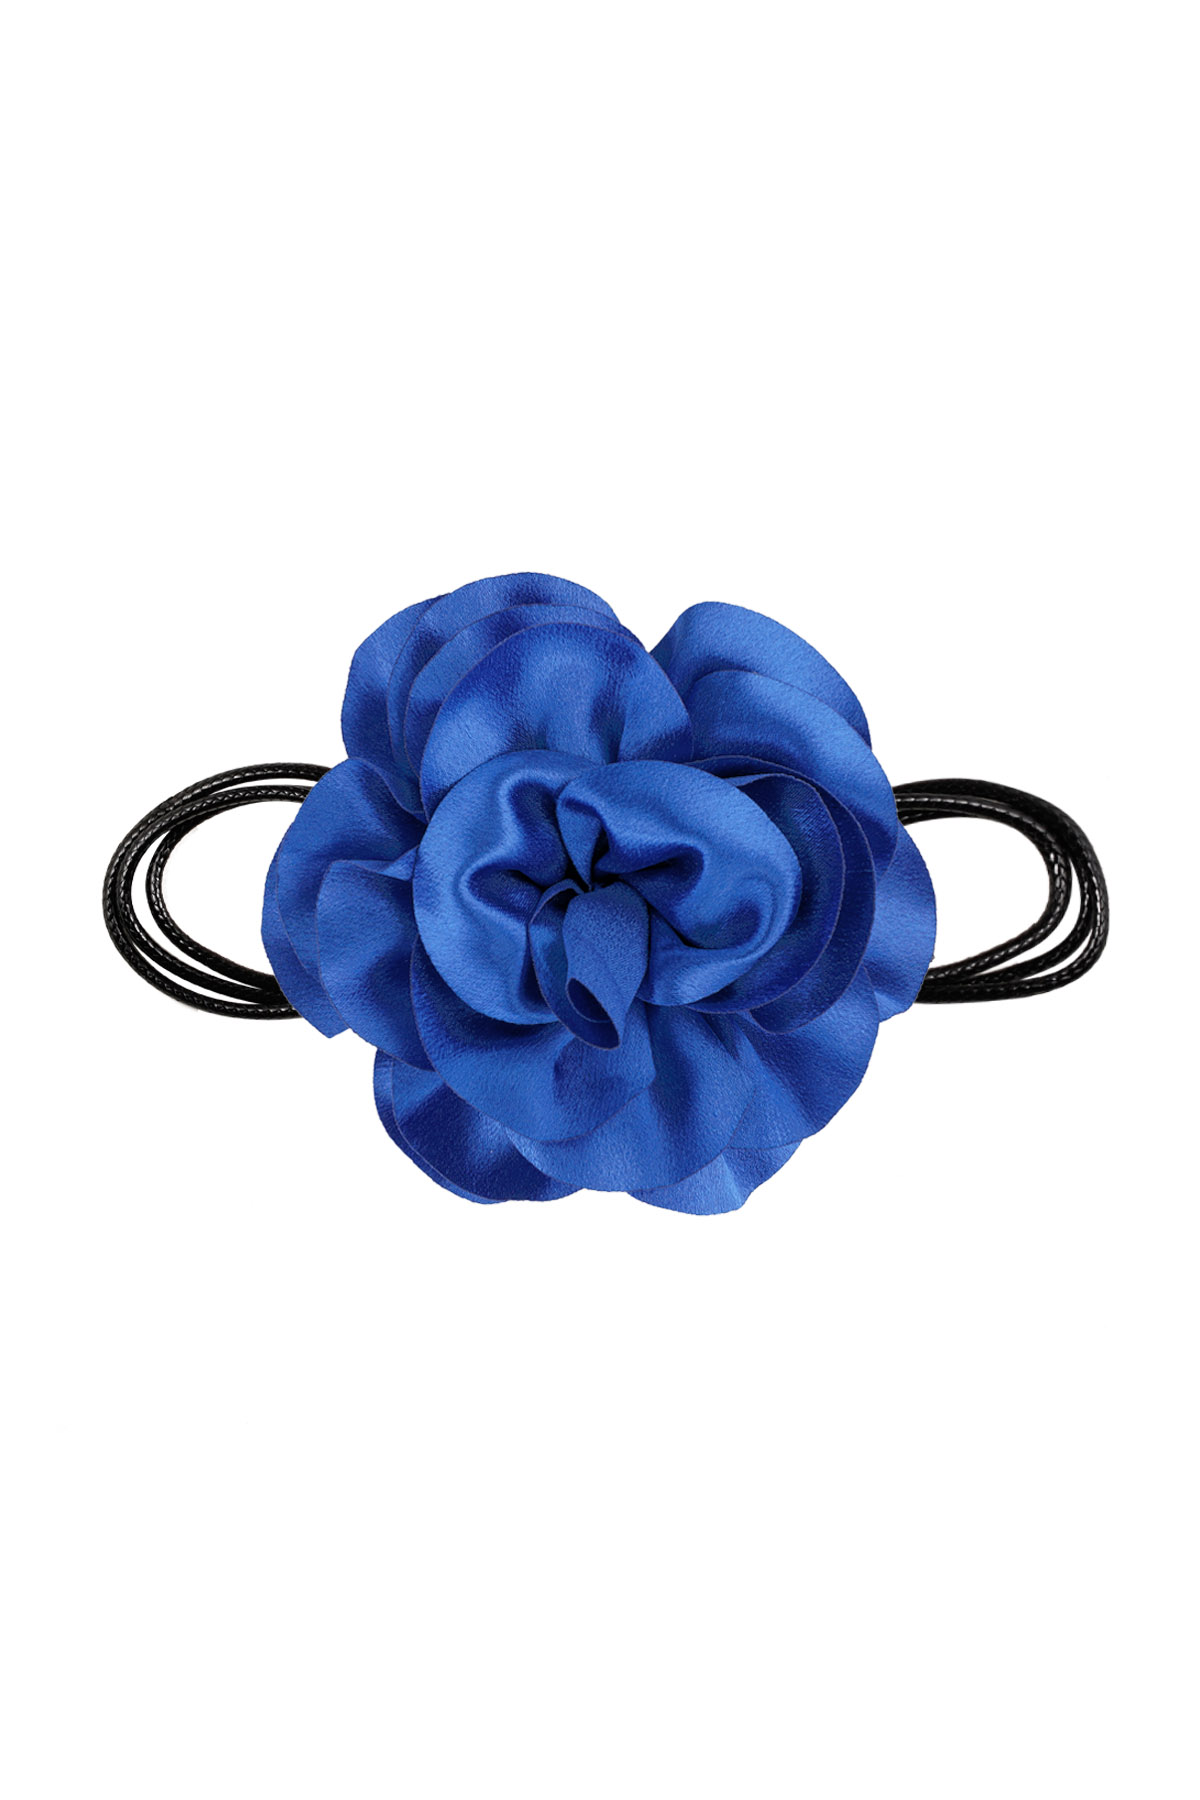 Ketting touw glimmende bloem - felblauw 